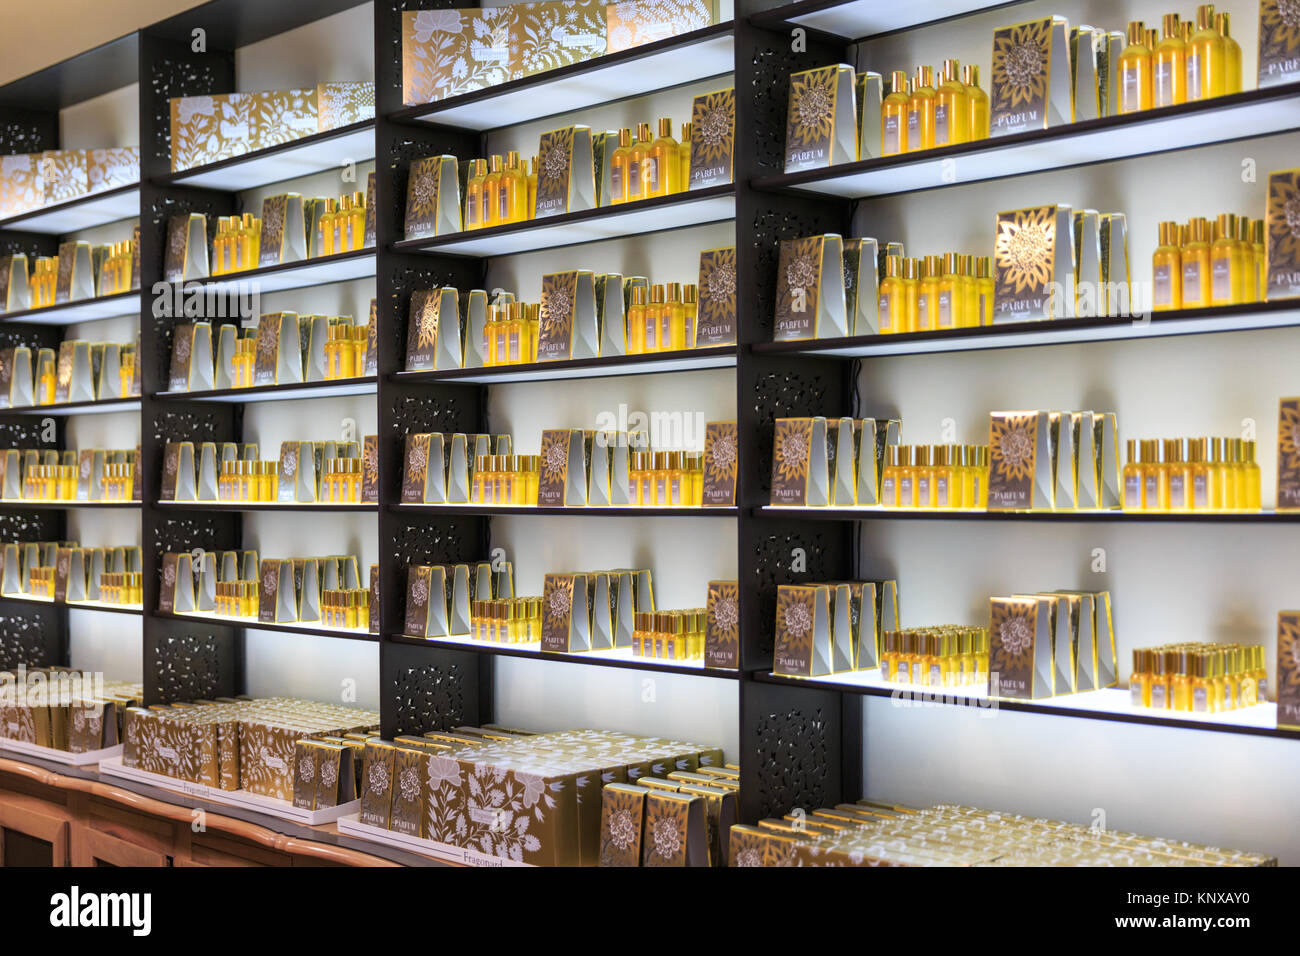 Parfumerie fragonard hi-res stock photography and images - Alamy